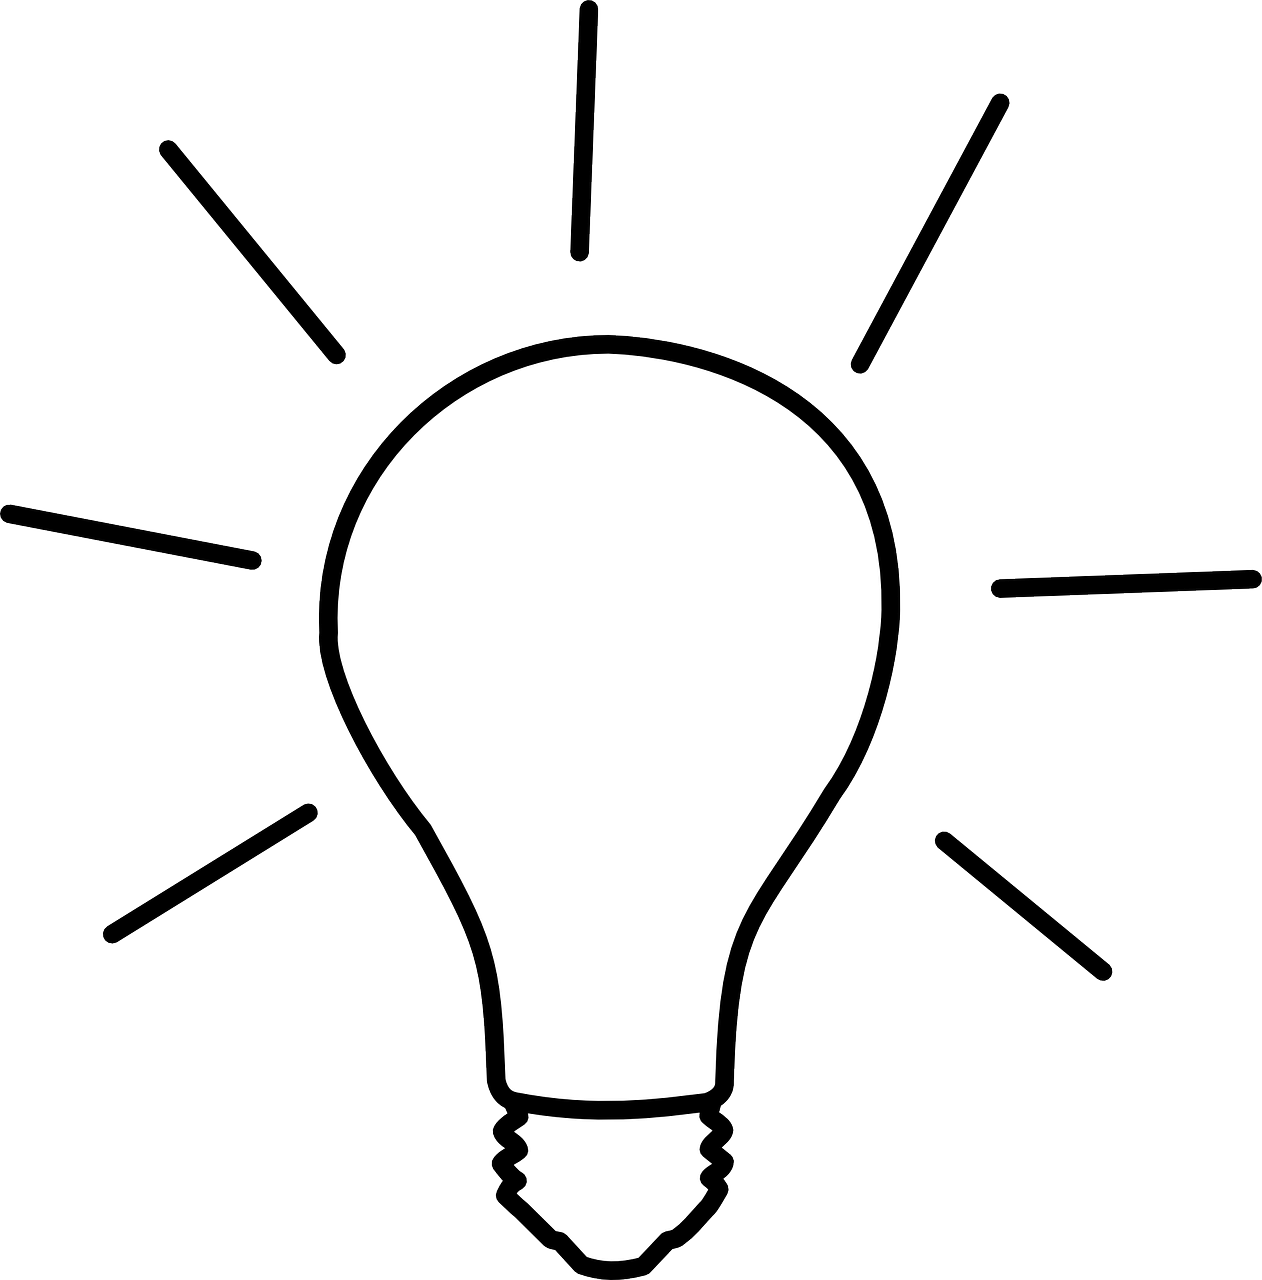 Illuminated Lightbulb Graphic PNG